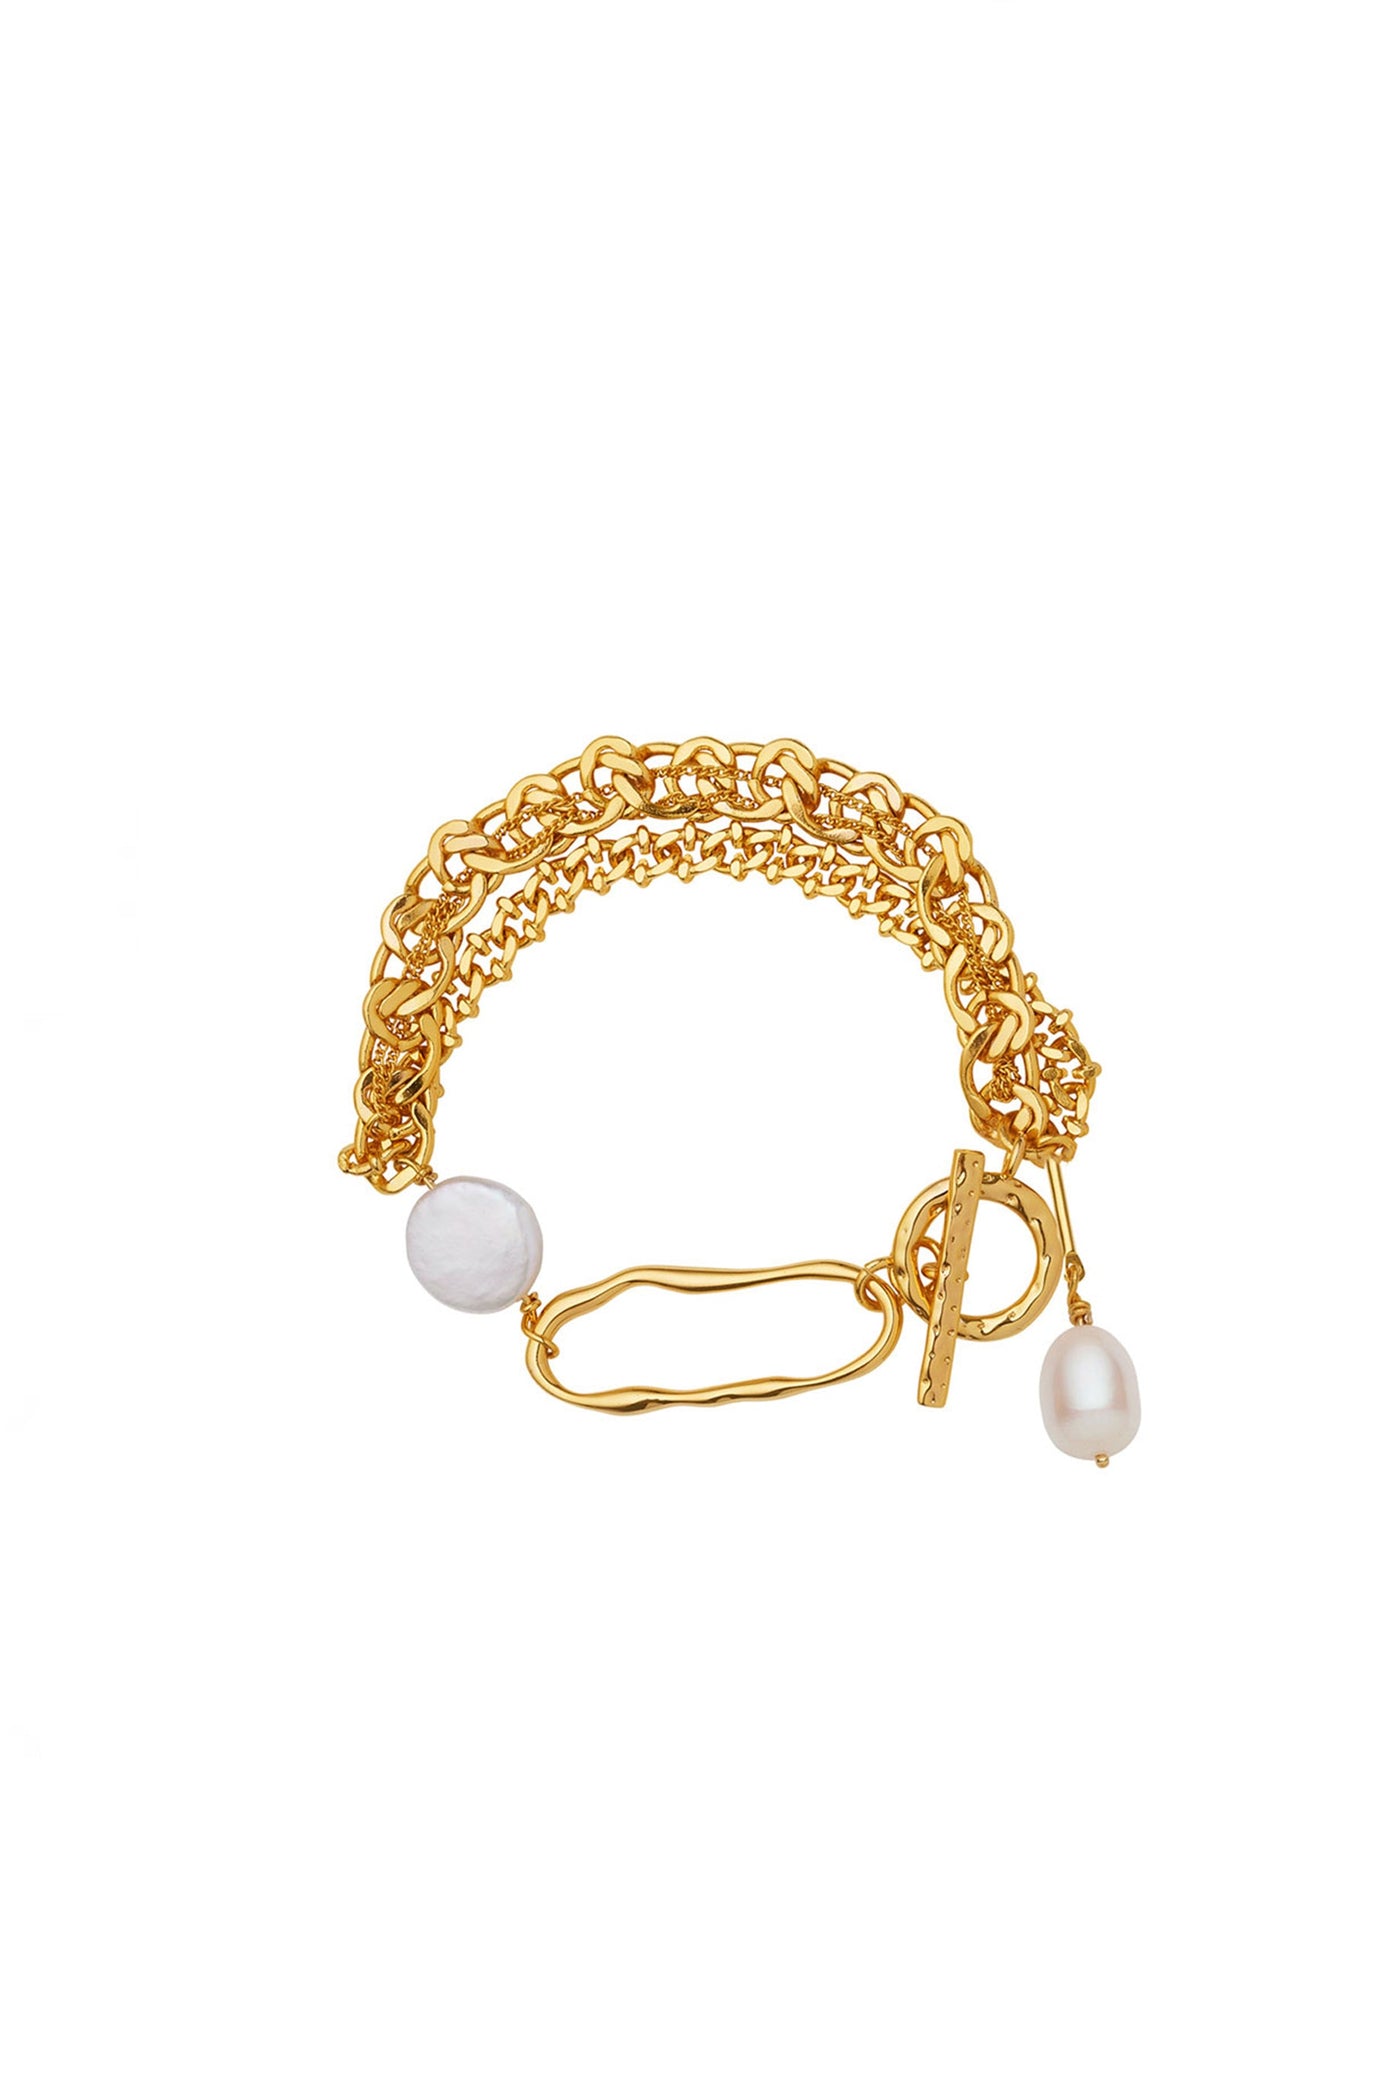 Amber Sceats Shiff Bracelet - Gold